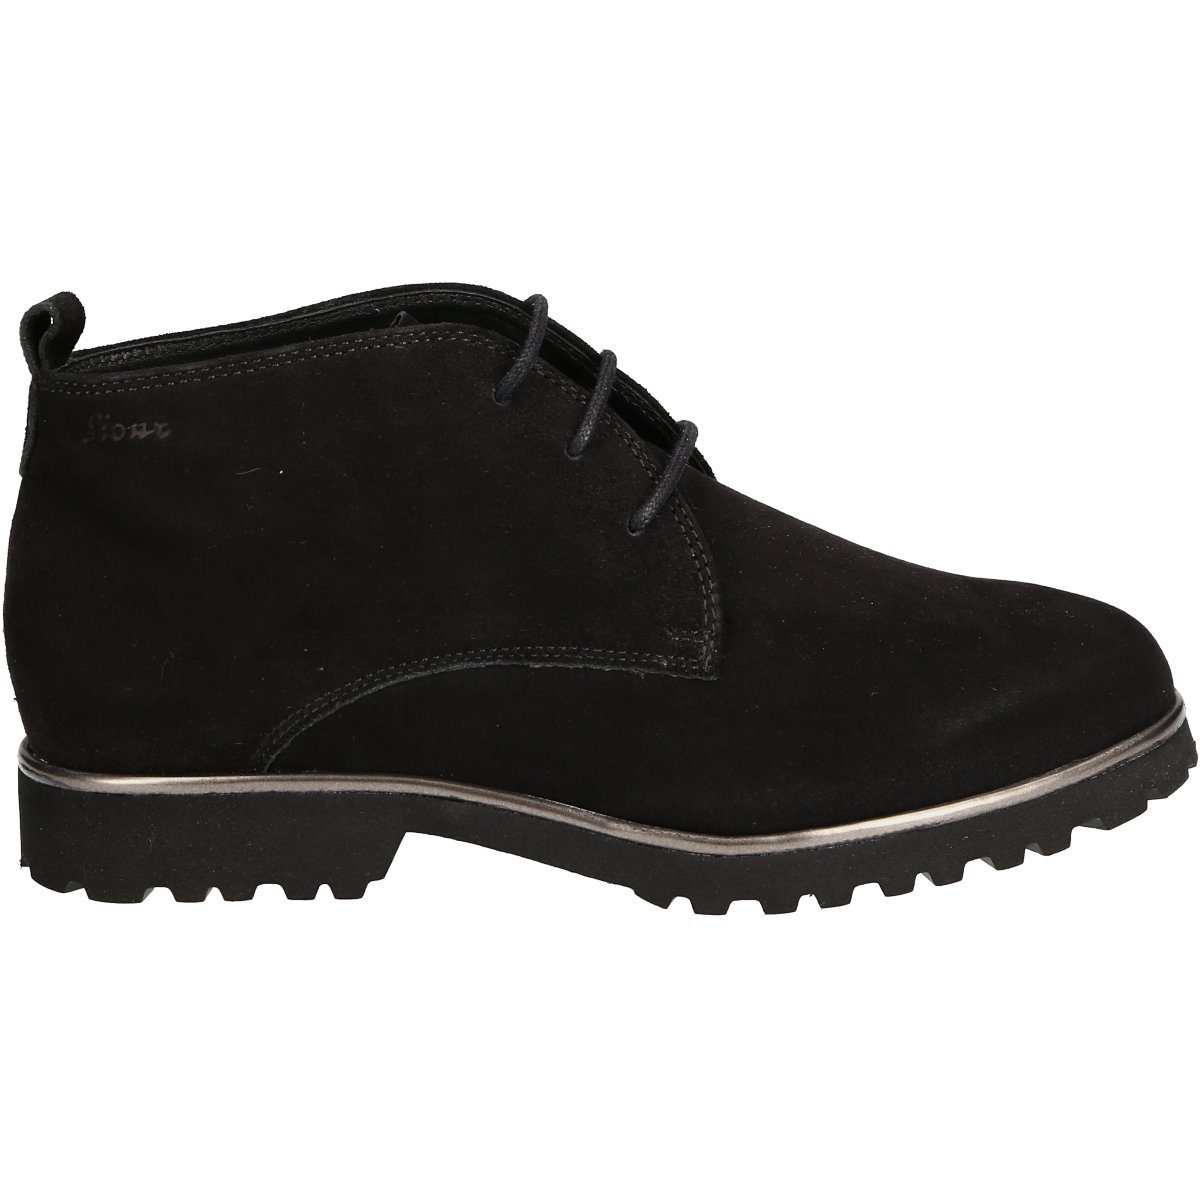 Schuhe Stiefel SIOUX MEREDITH-702-WF-XL Stiefel